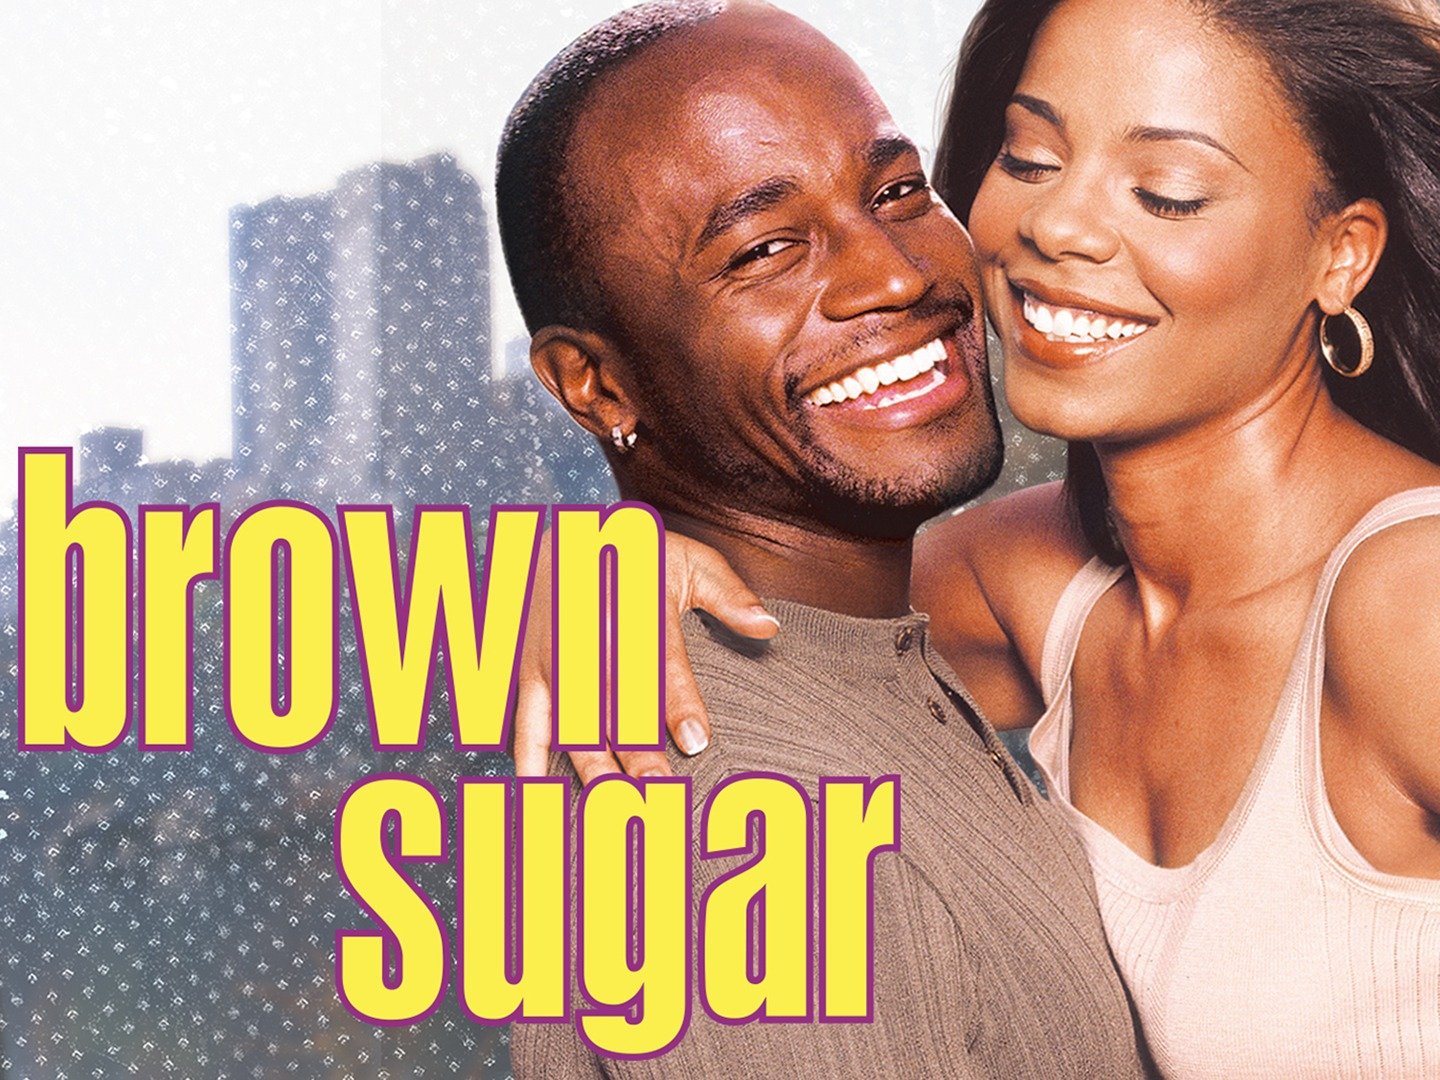 brown sugar movie poster